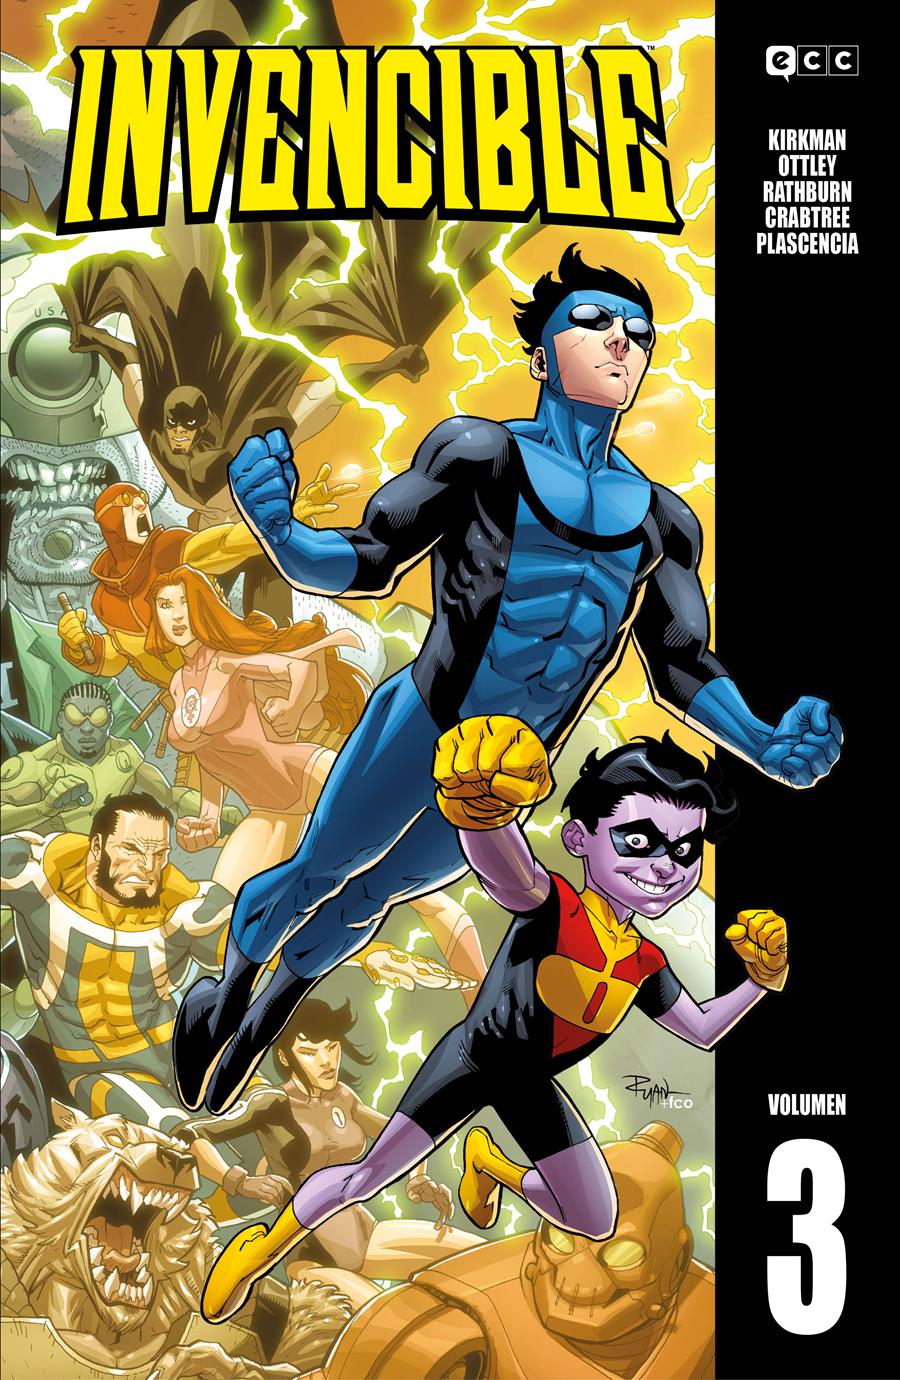 Invencible vol. 3 de 8 (Edición Deluxe) | N0223-ECC39 | Robert Kirkman / Ryan Ottley | Terra de Còmic - Tu tienda de cómics online especializada en cómics, manga y merchandising